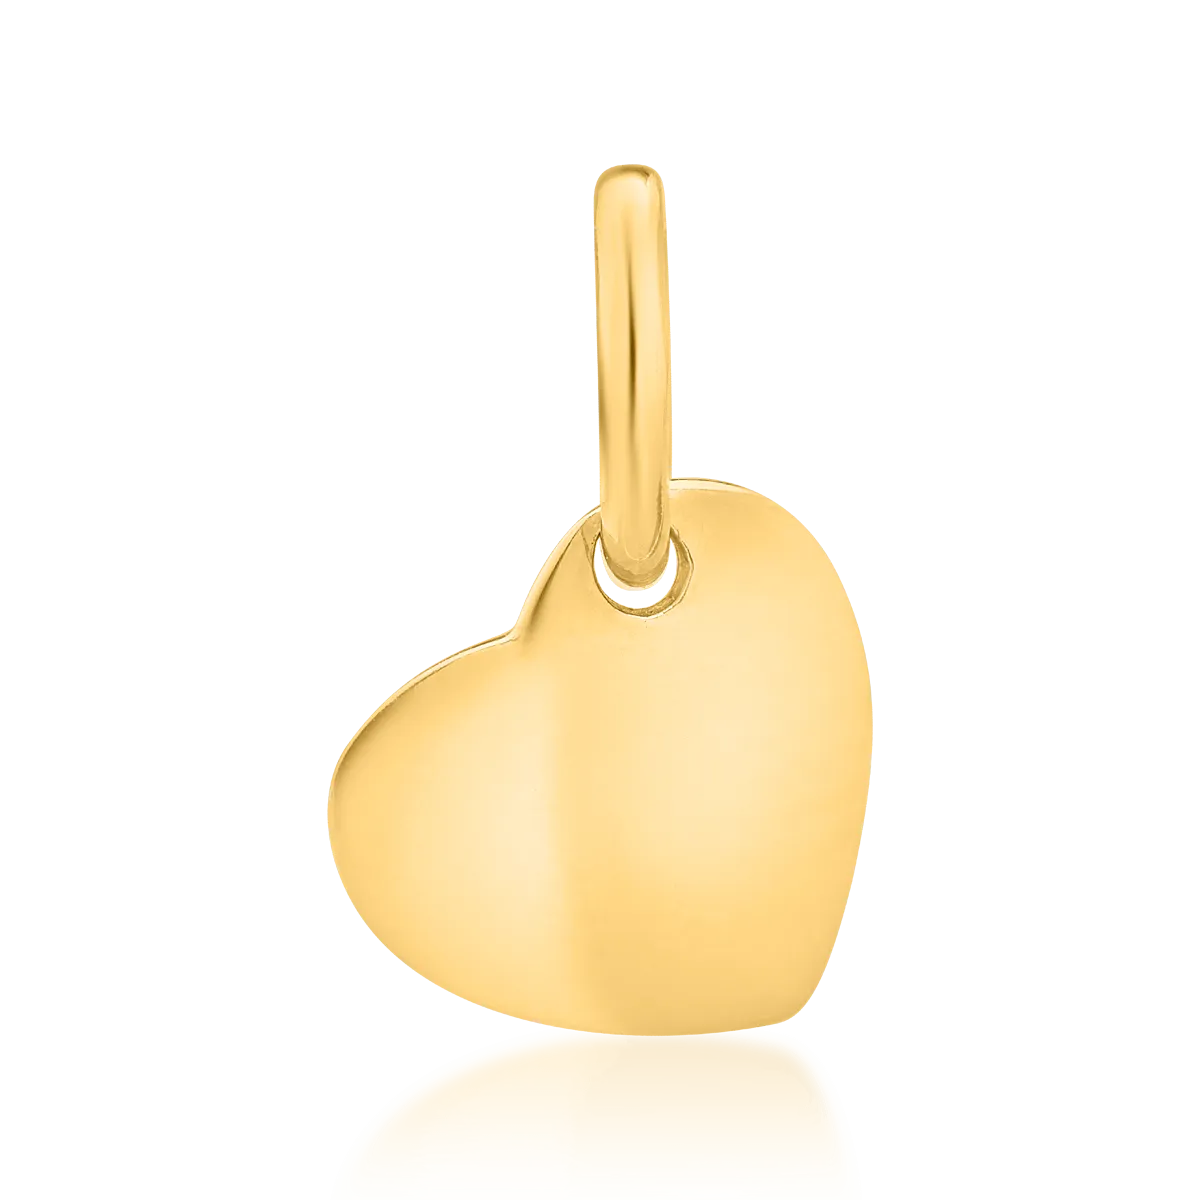 14K yellow gold heart pendant